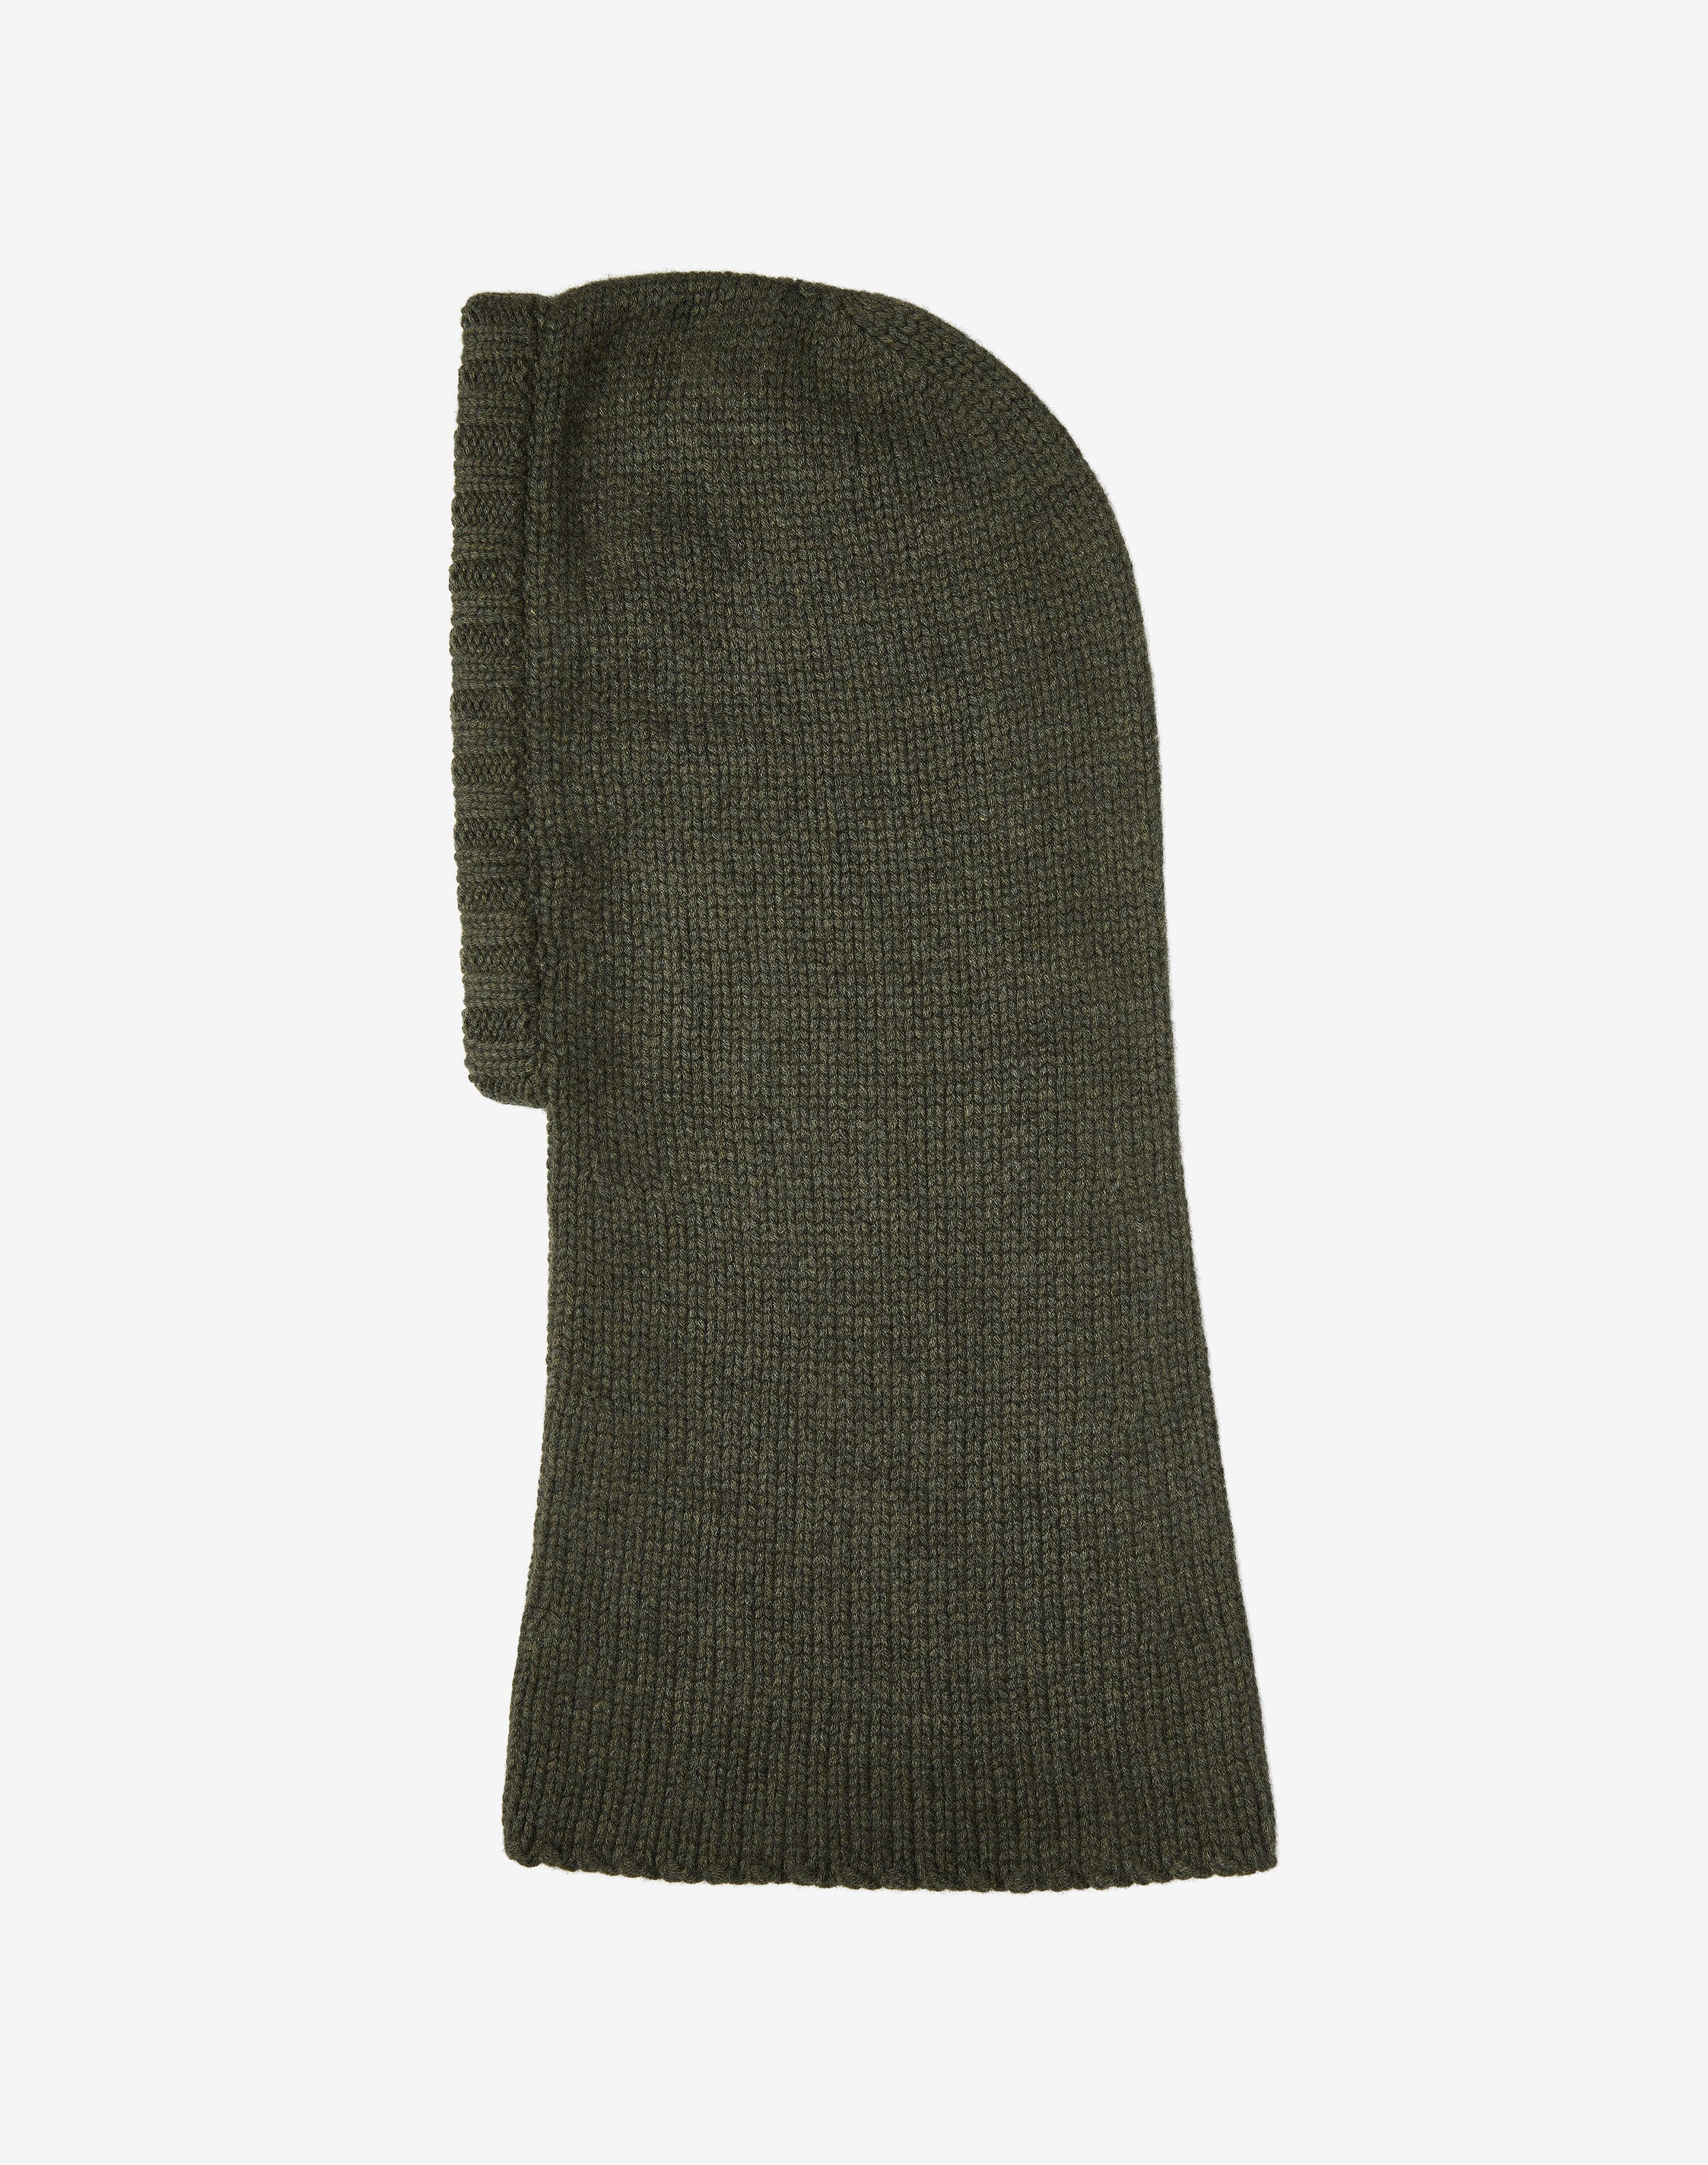 Green Cashmere Knit Snood | Accessories | Brora Fashion